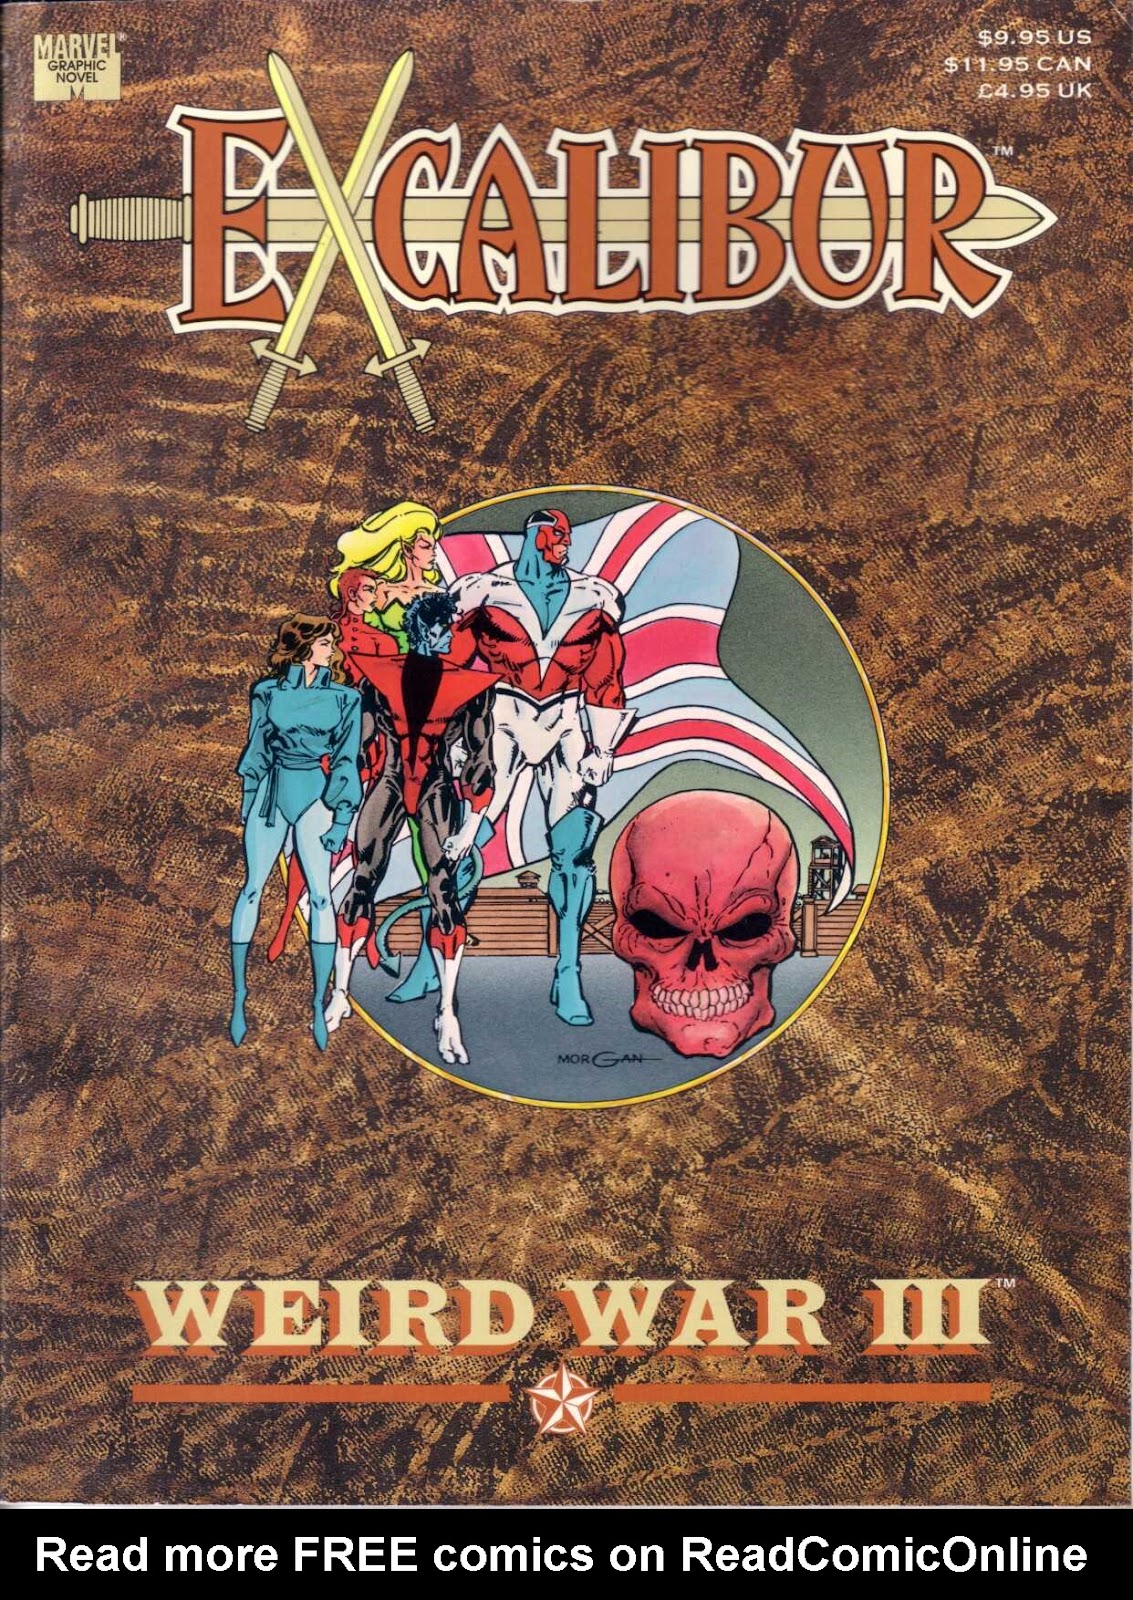 <{ $series->title }} issue 66 - Excalibur - Weird War III - Page 1